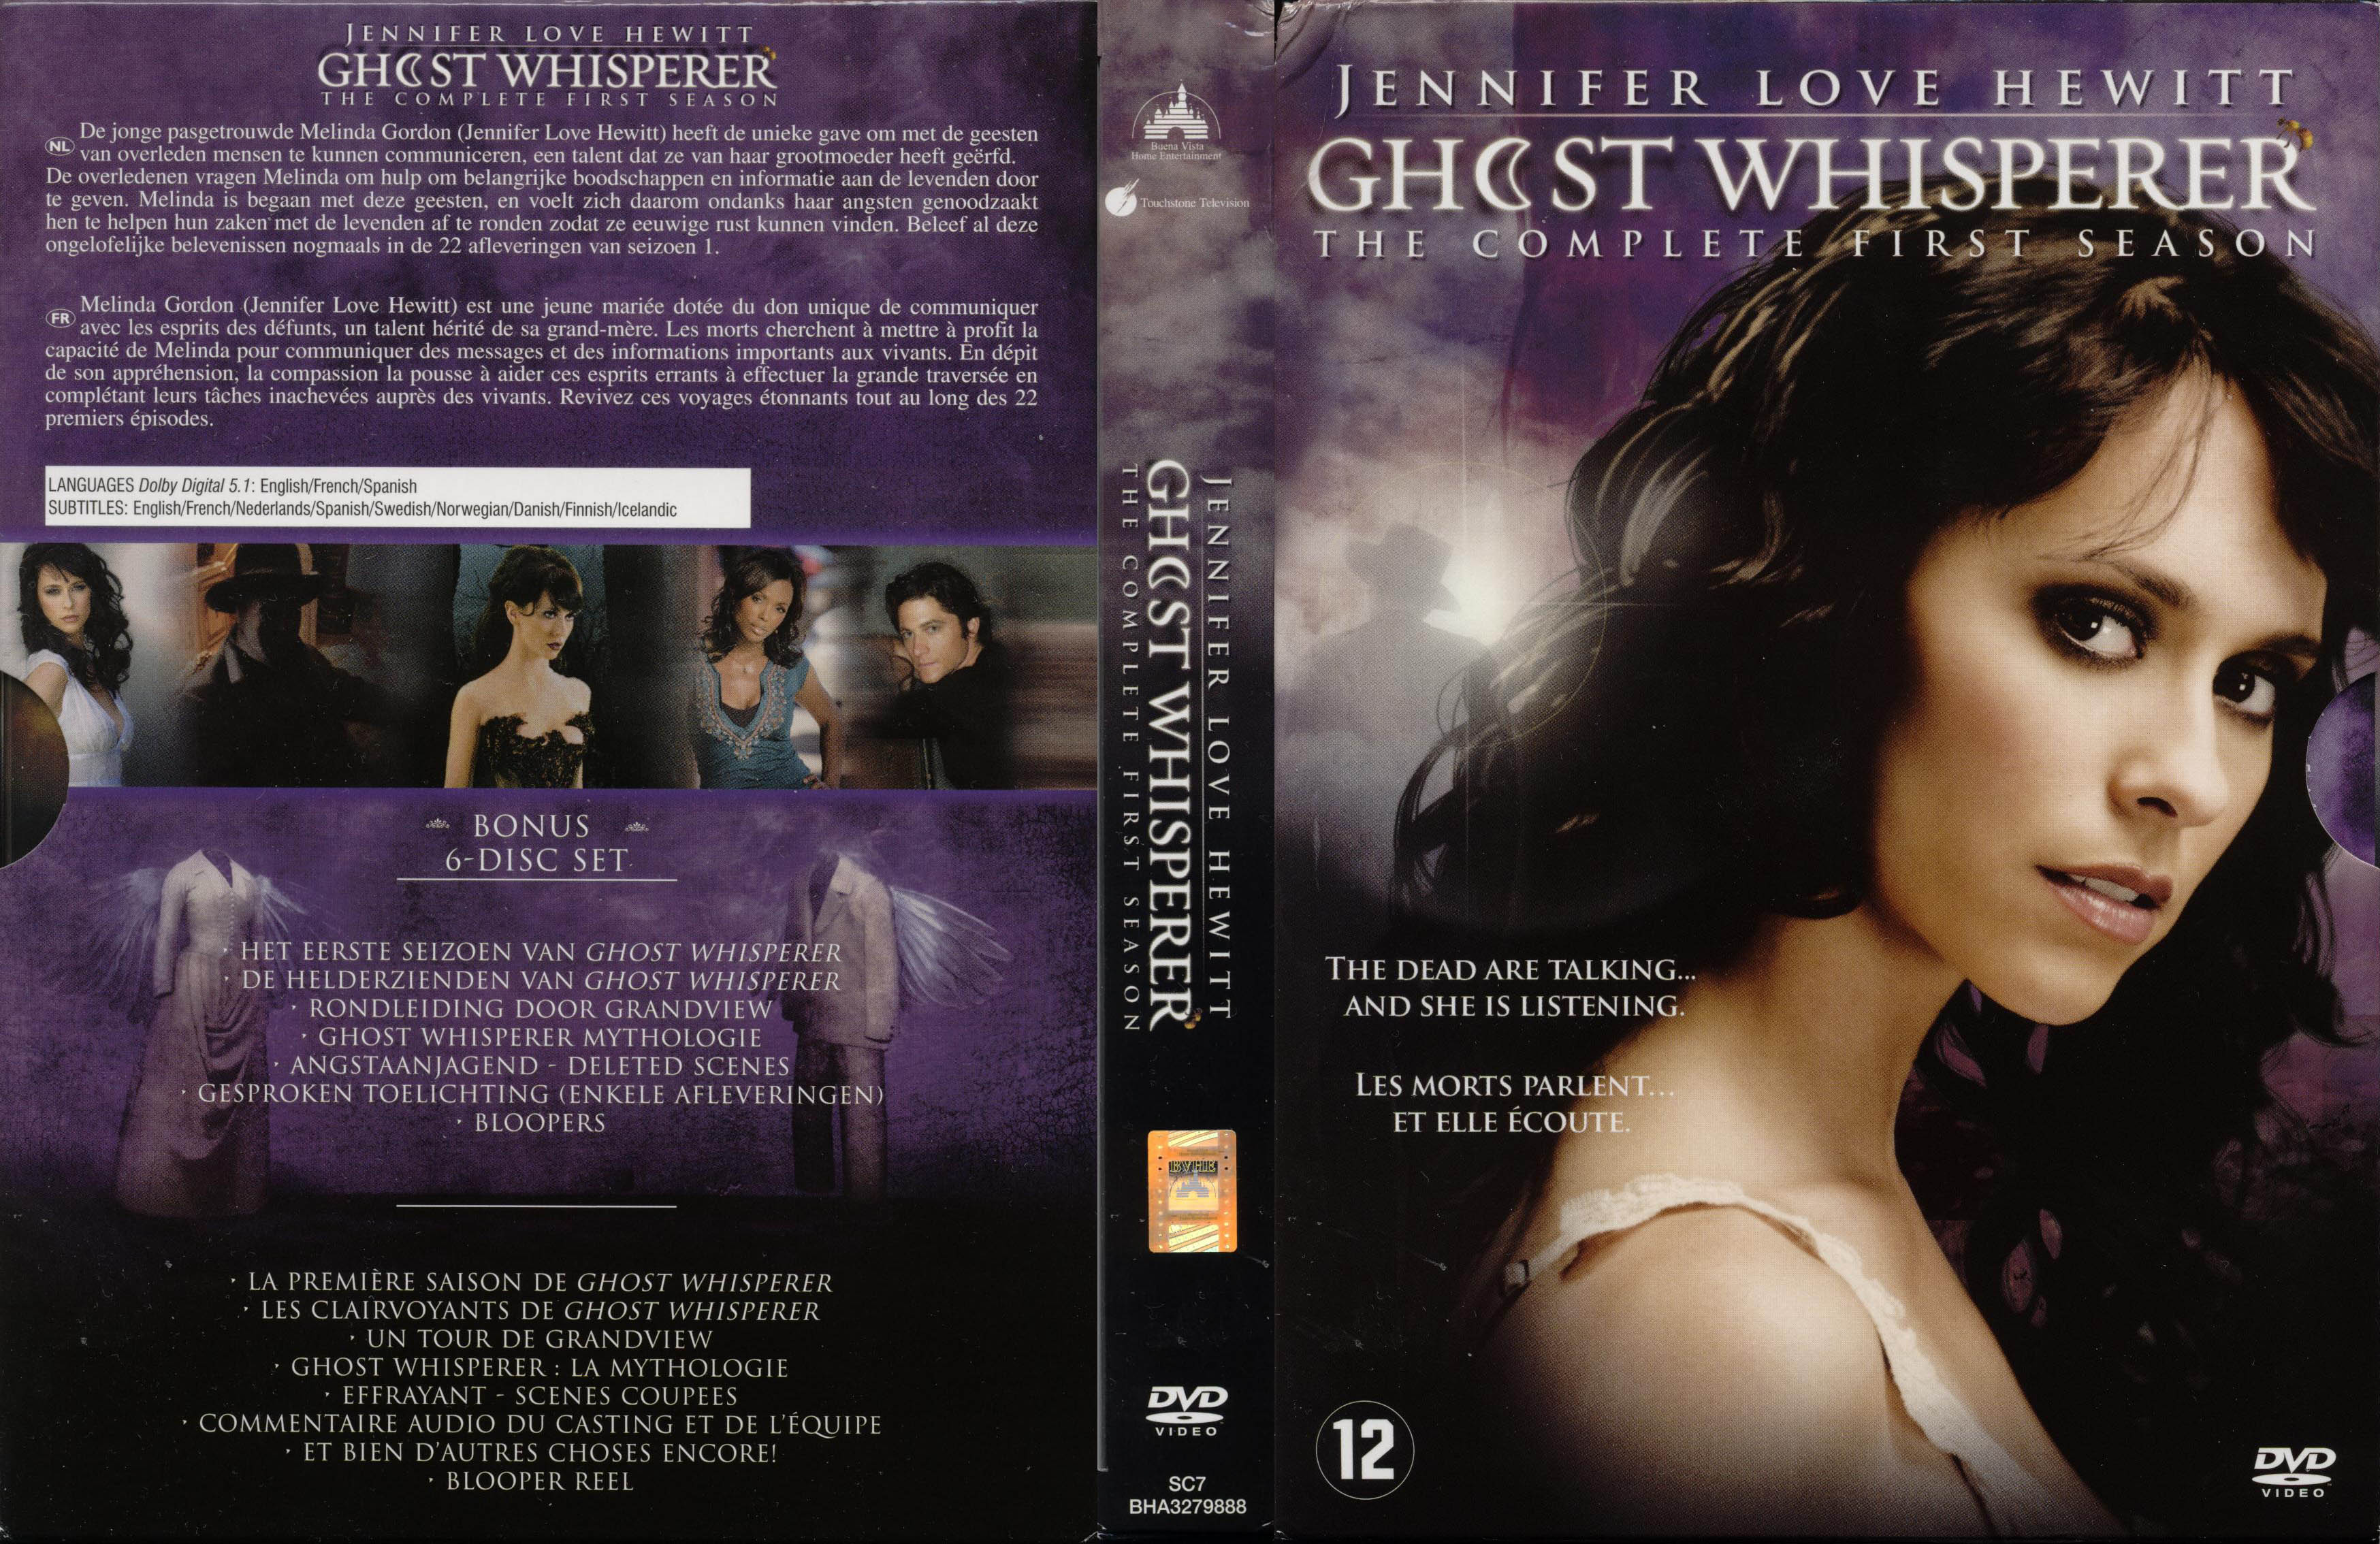 Jaquette DVD Ghost whisperer Saison1 COFFRET